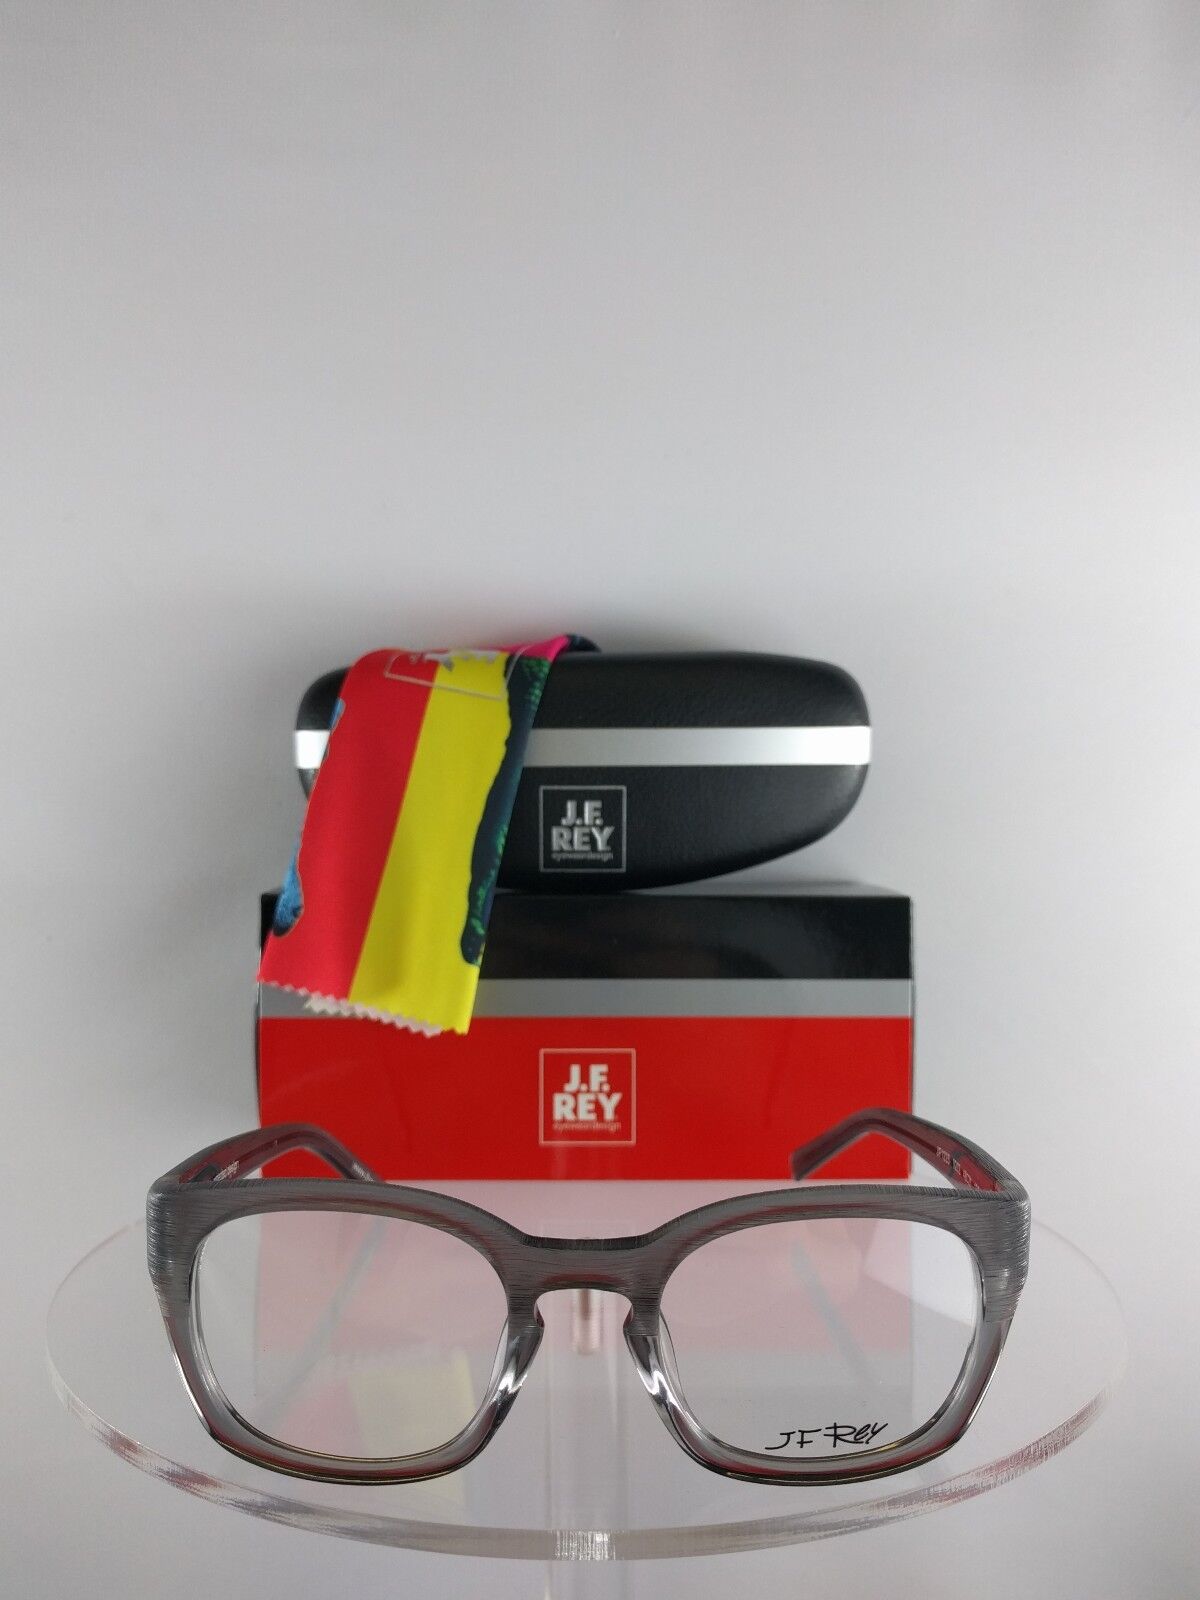 Brand New Authentic J.F. REY Eyeglasses JF1225 0202 Gray 48mm 1225